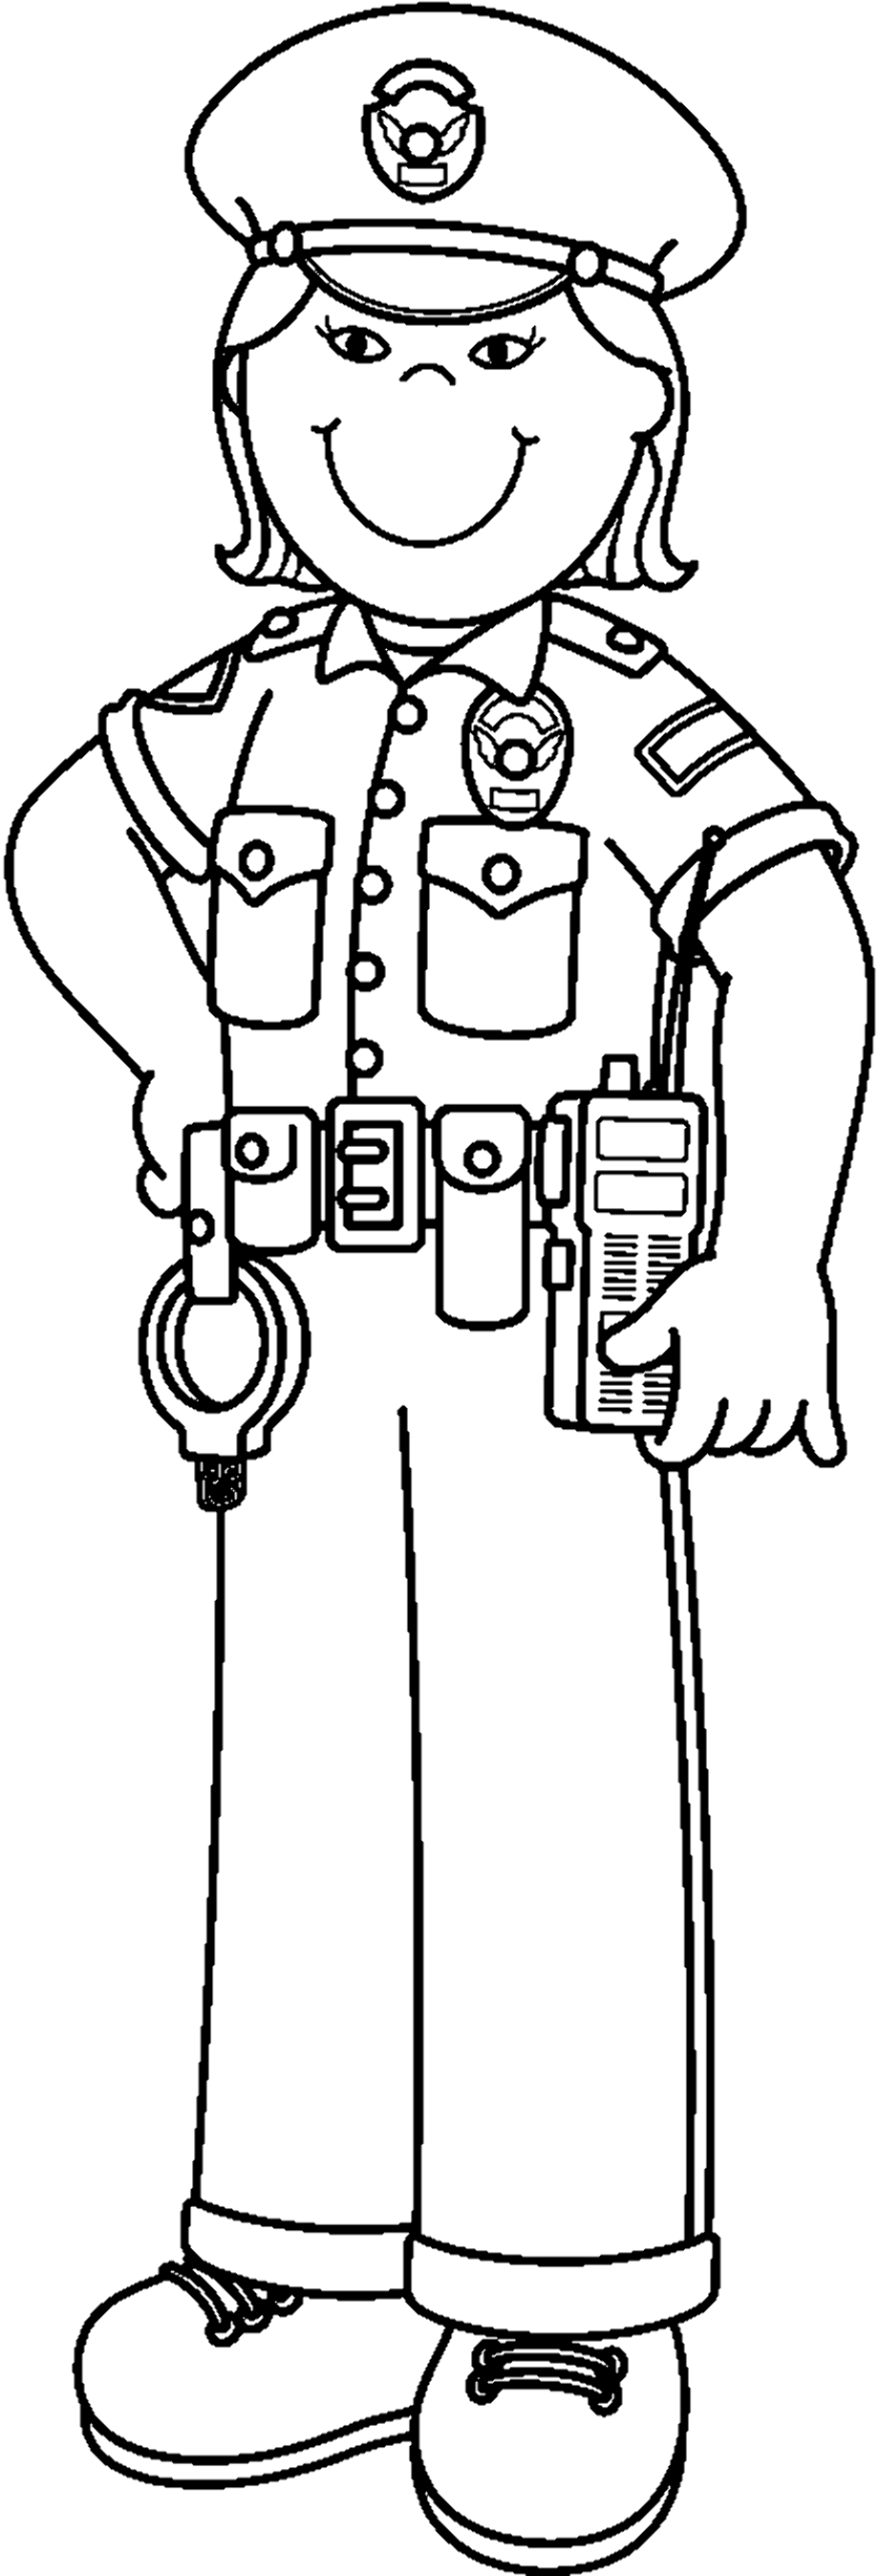 Police Coloring Law Enforcement Drawing Uniform Handcuffs Cop Hoops ...